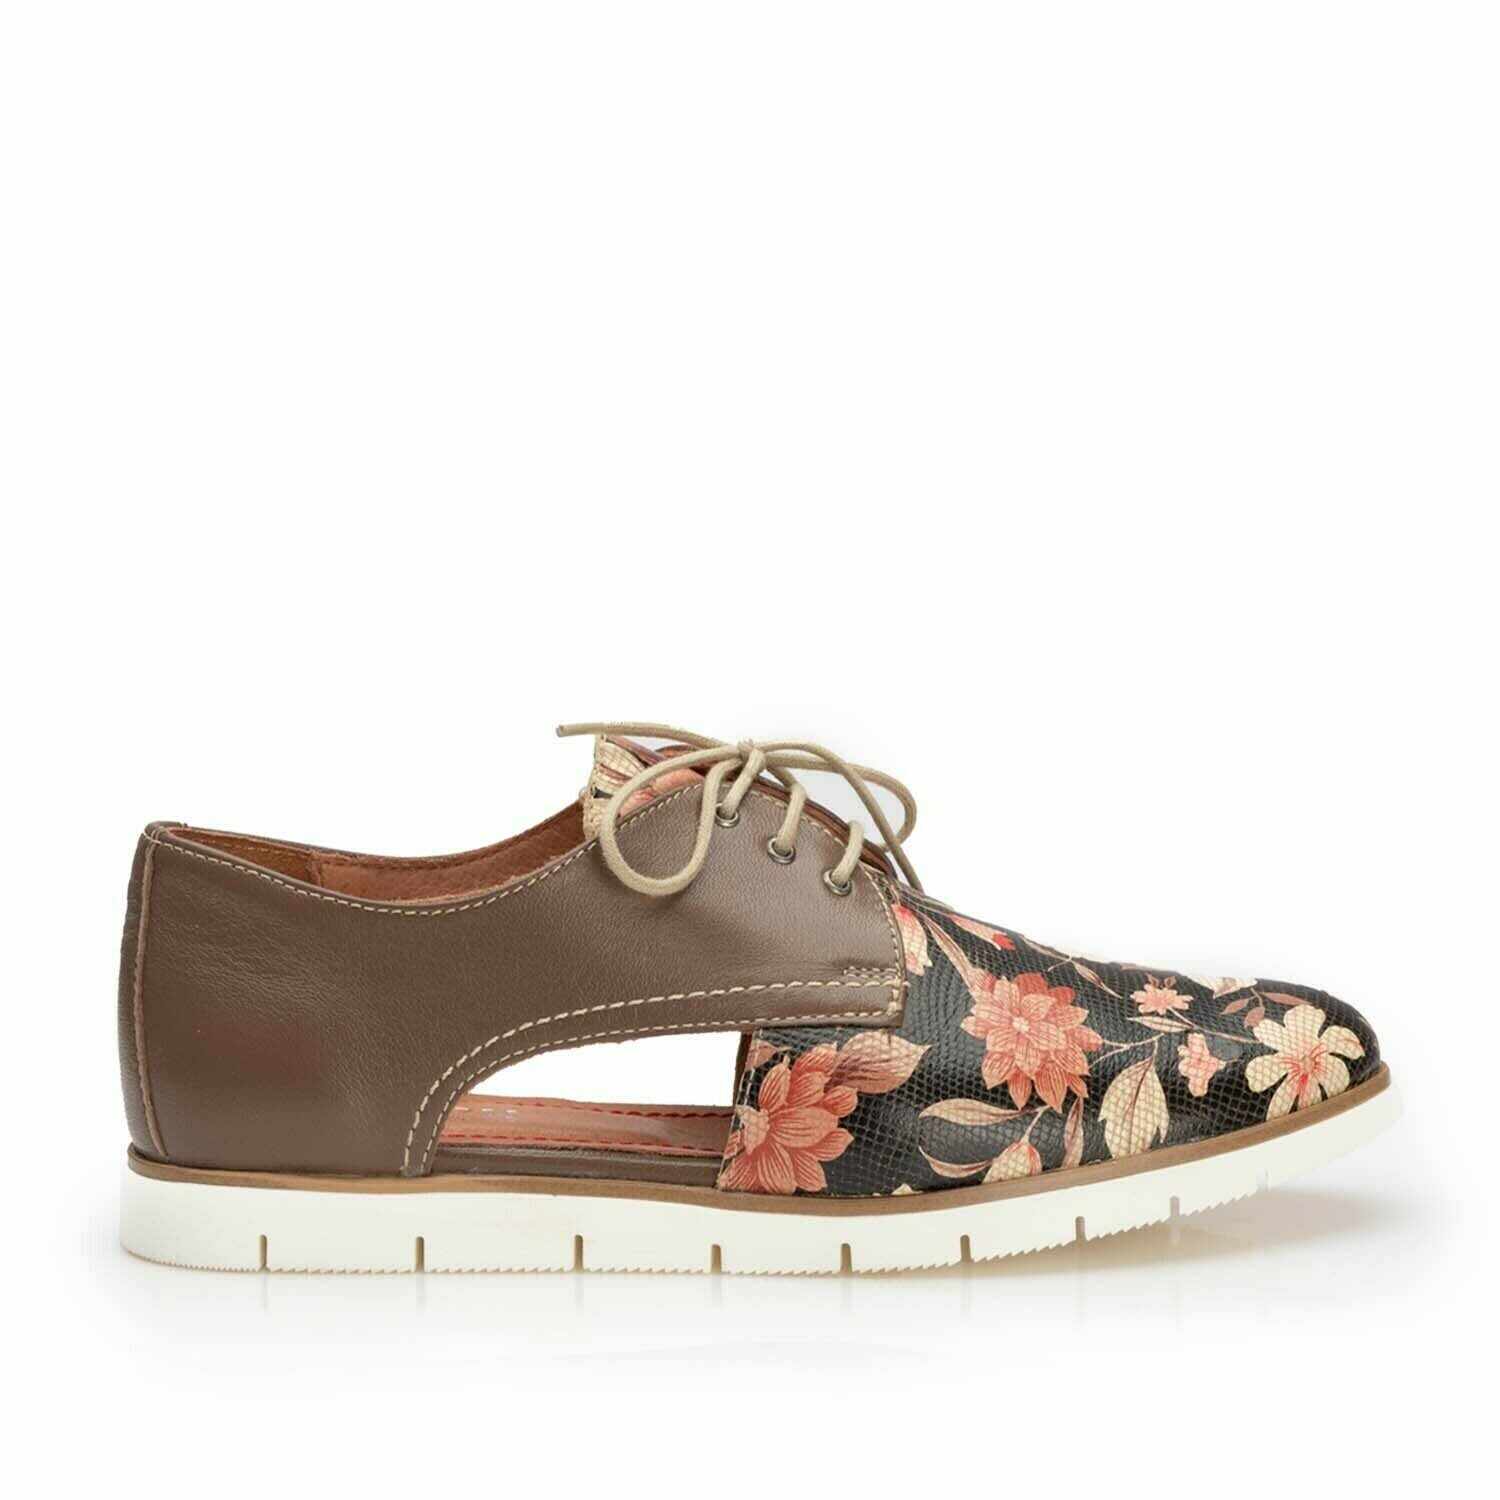 Pantofi casual dama, perforati din piele naturala,Leofex - 022 taupe floral